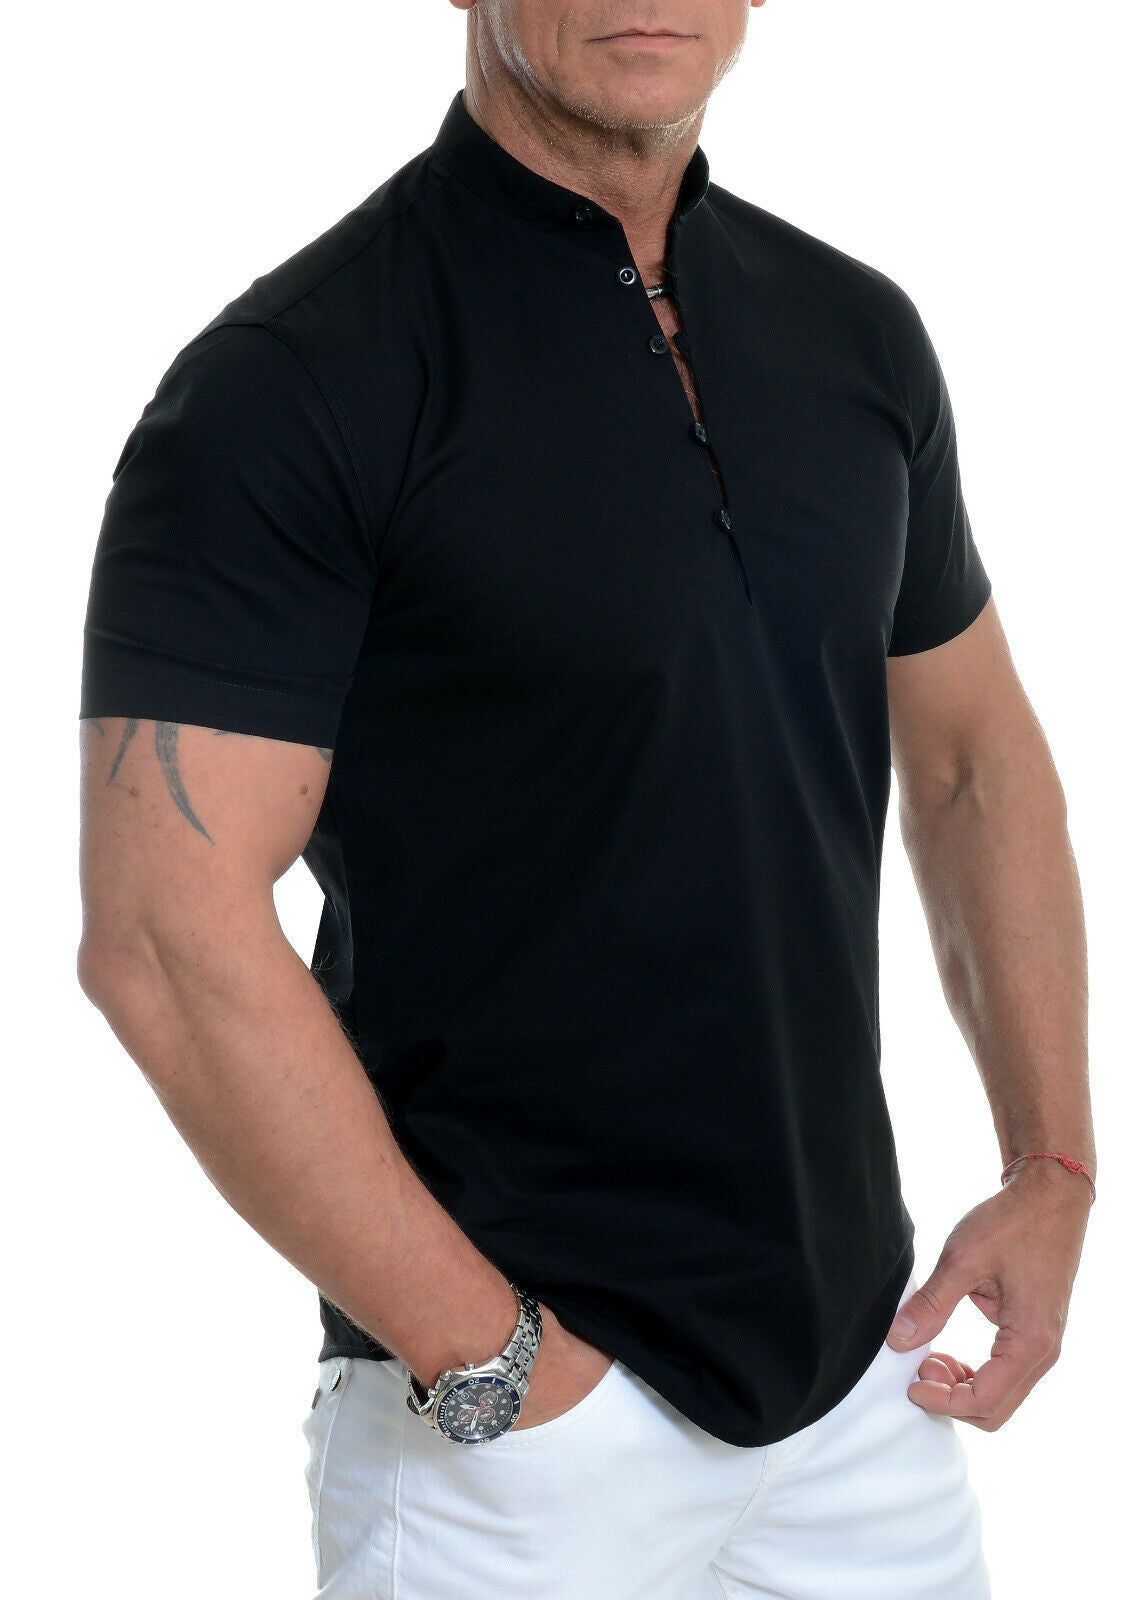 2020 Charm Men's Shirt Ultra Light Short-sleeved Casual